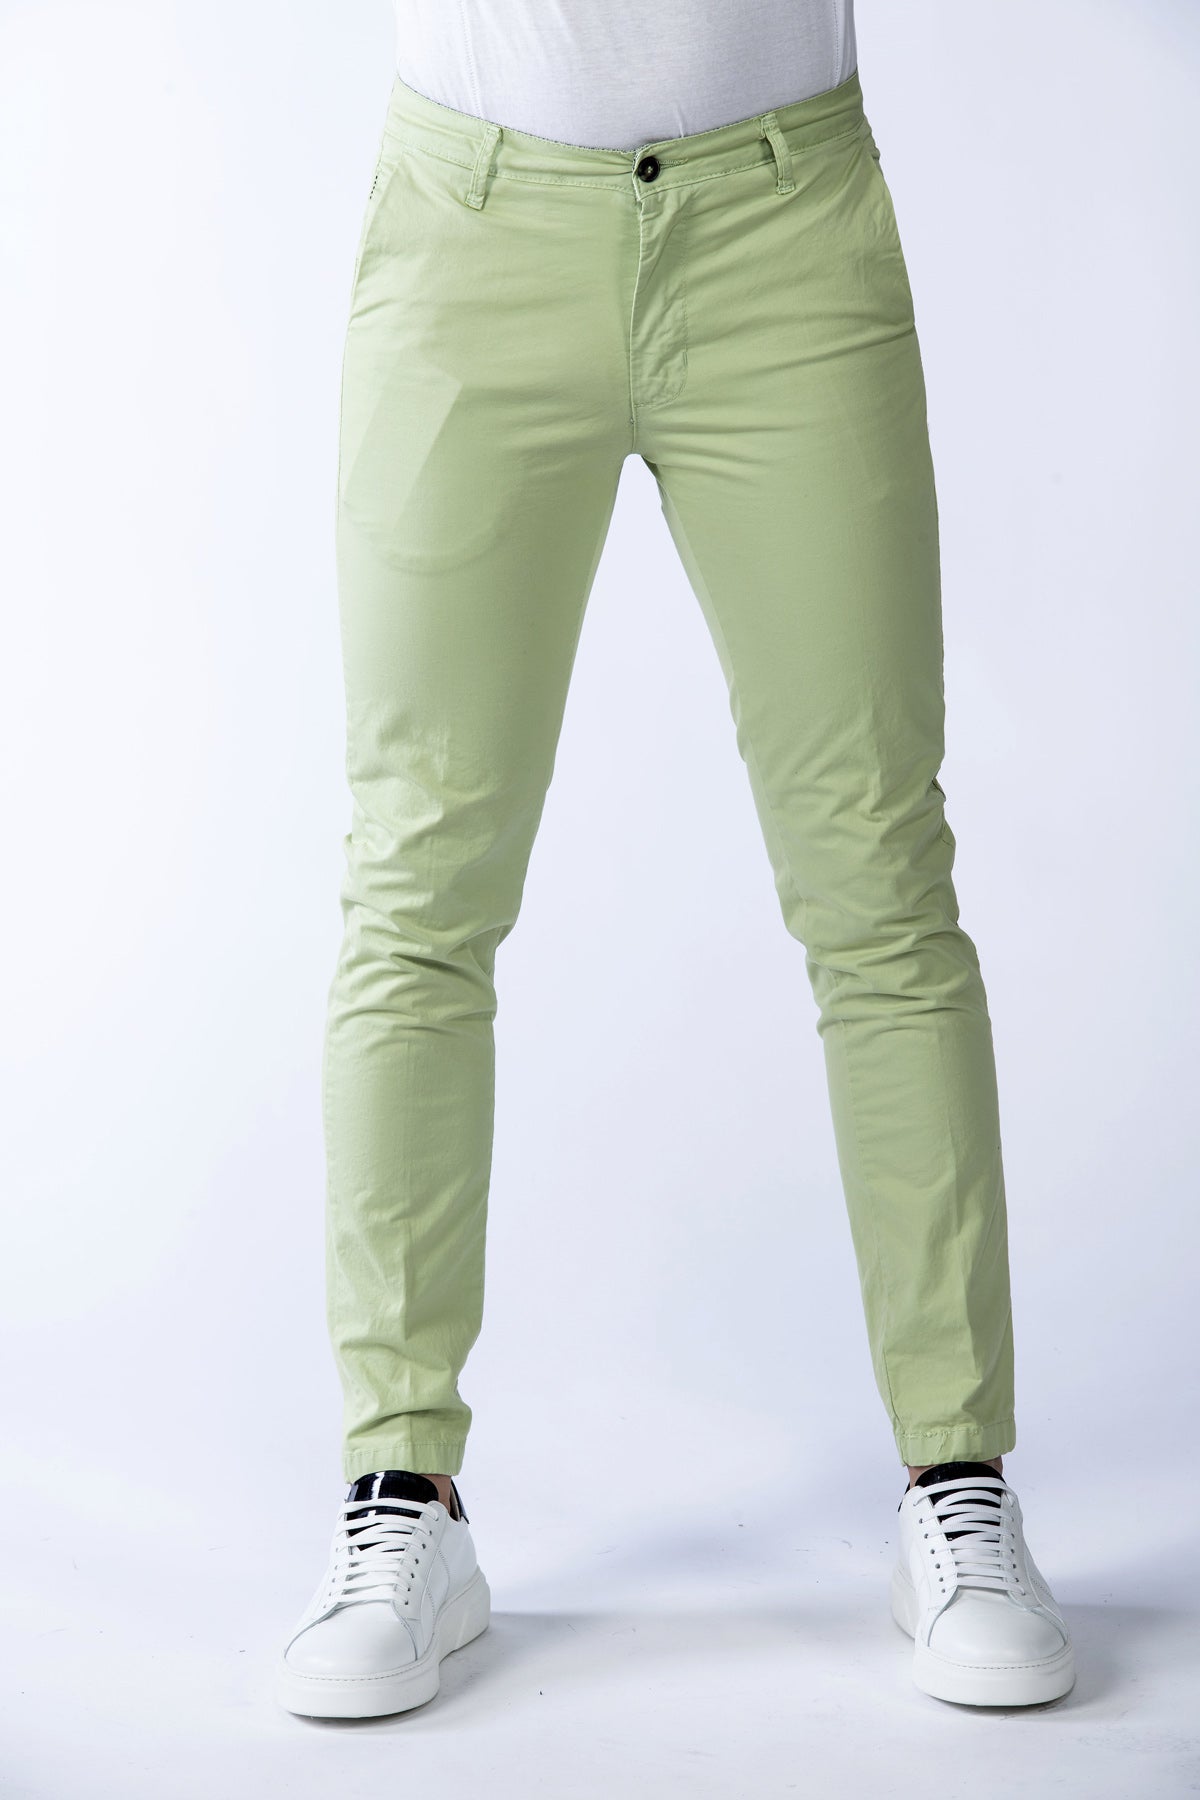 Pantalone stretch uomo Bakerloo color verde mela